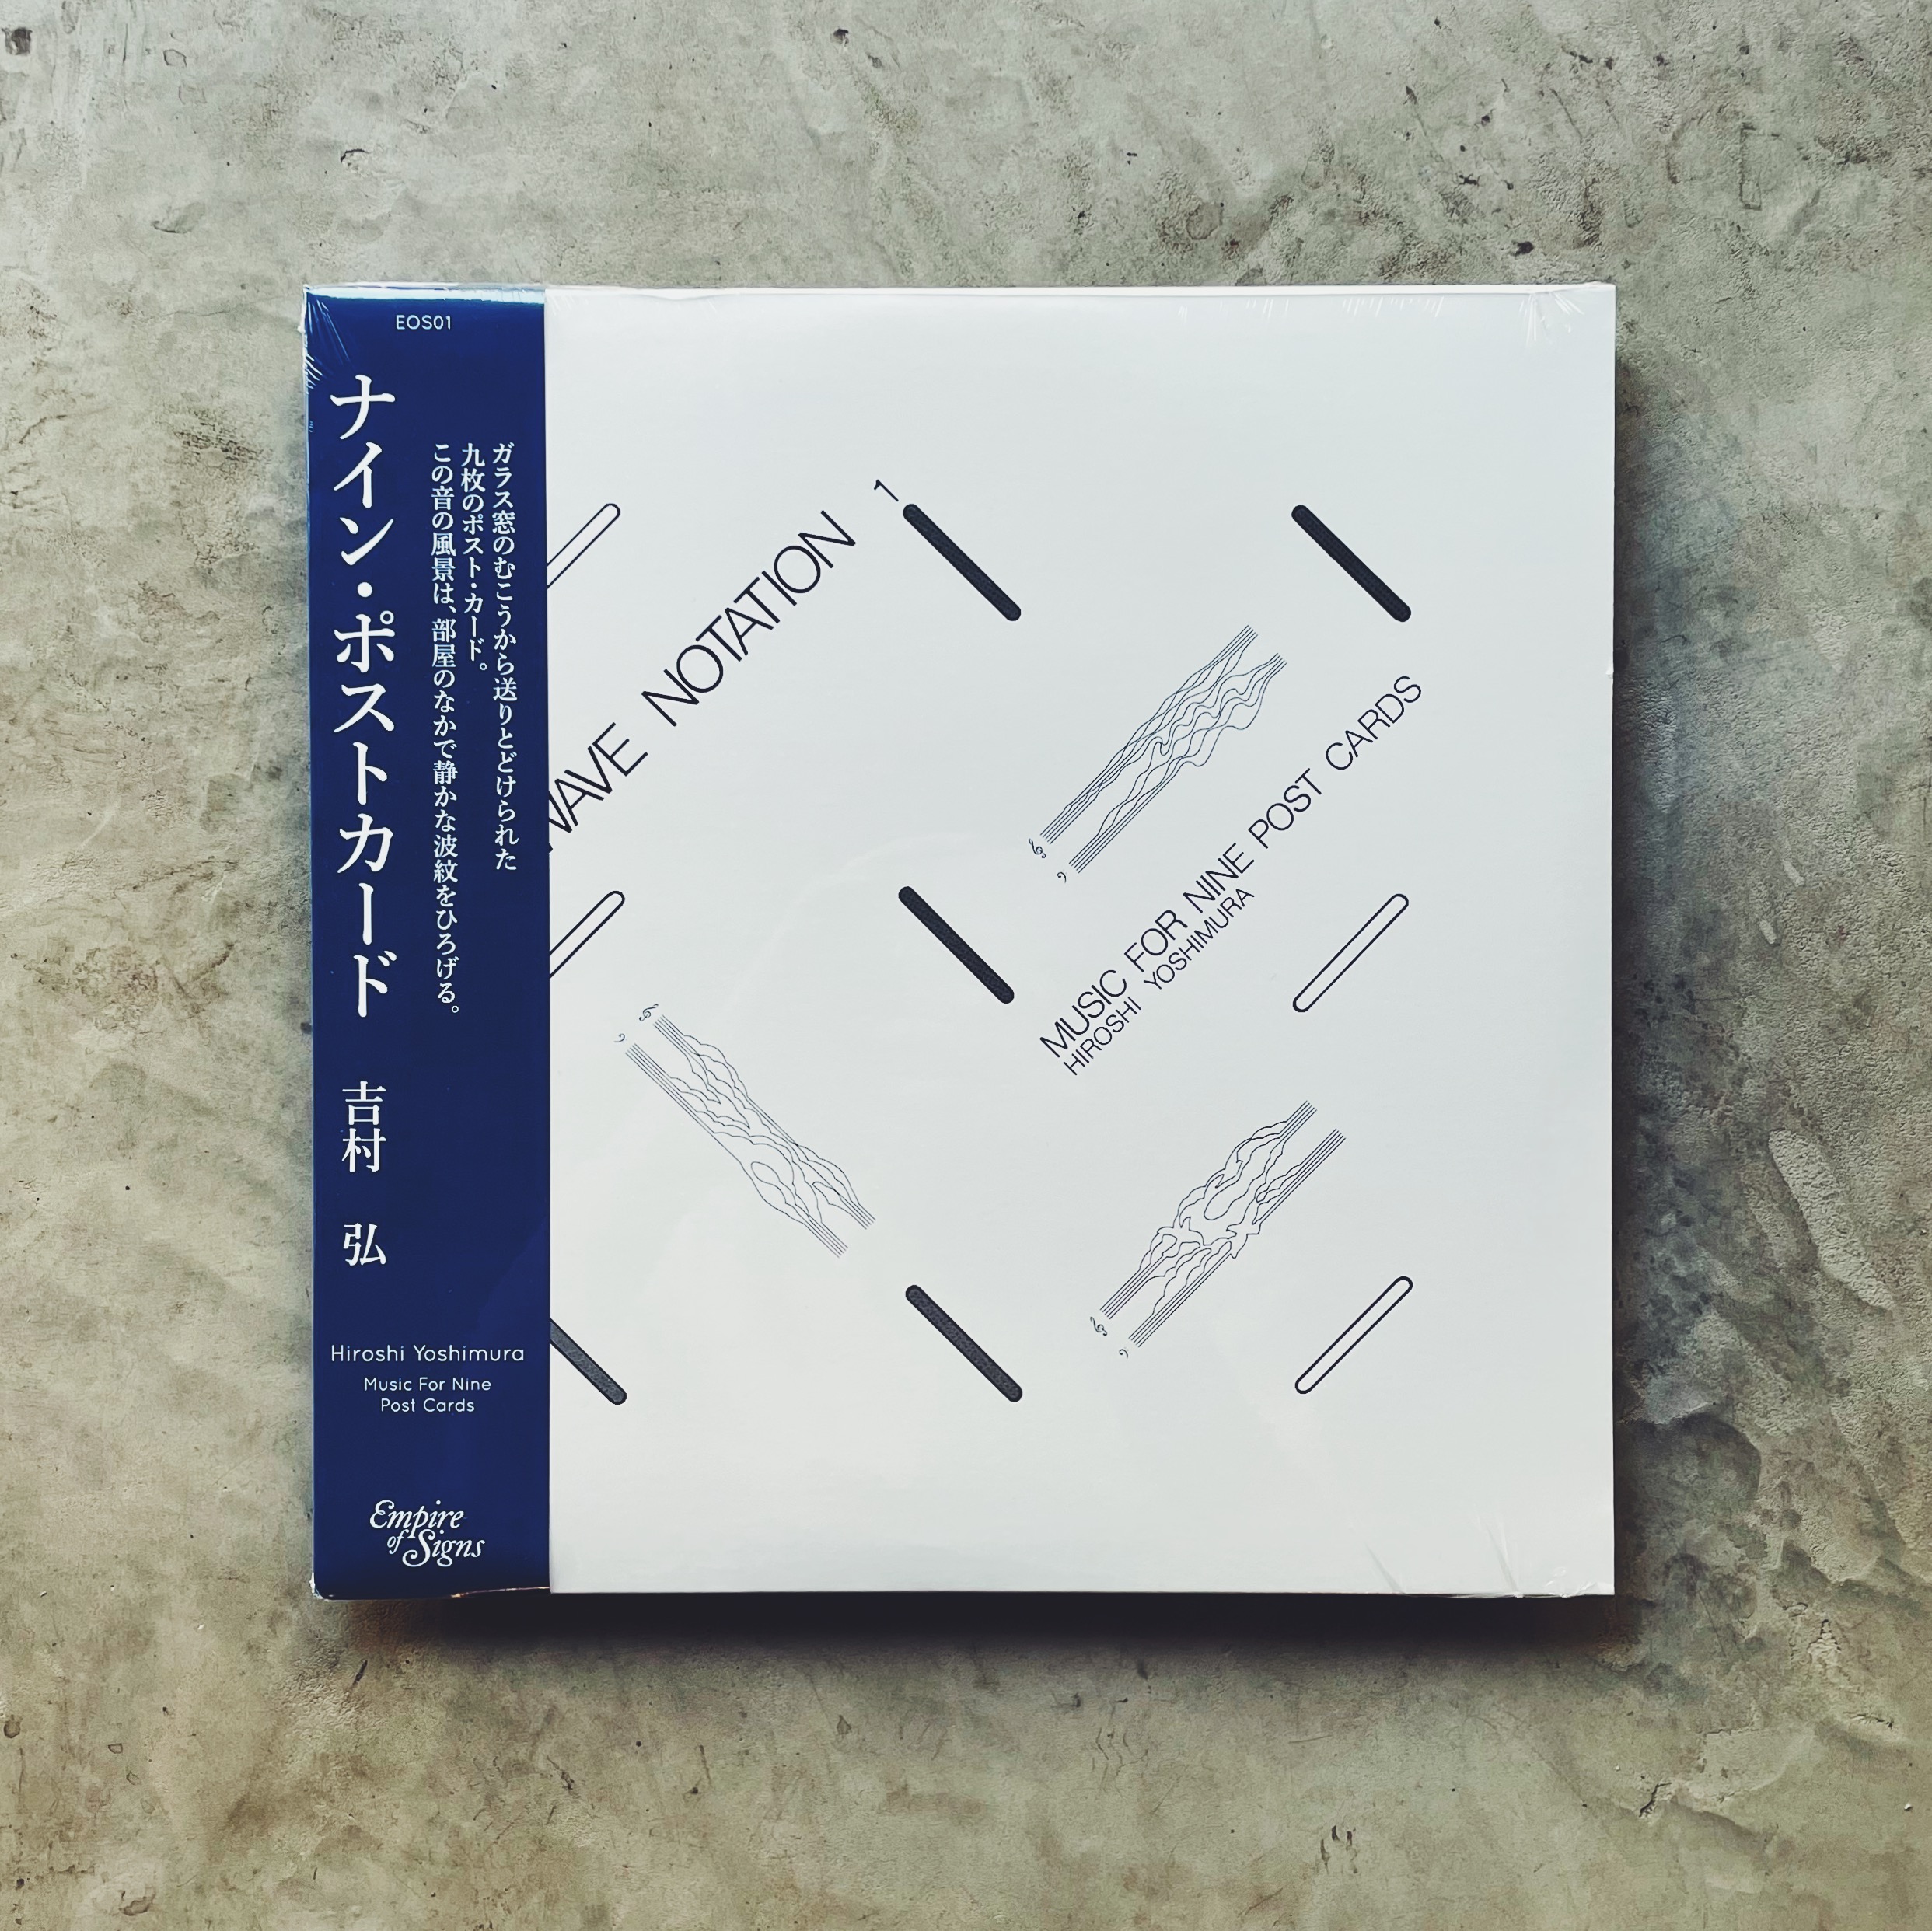 Hiroshi Yoshimura - Music for Nine Post Cards [LP]